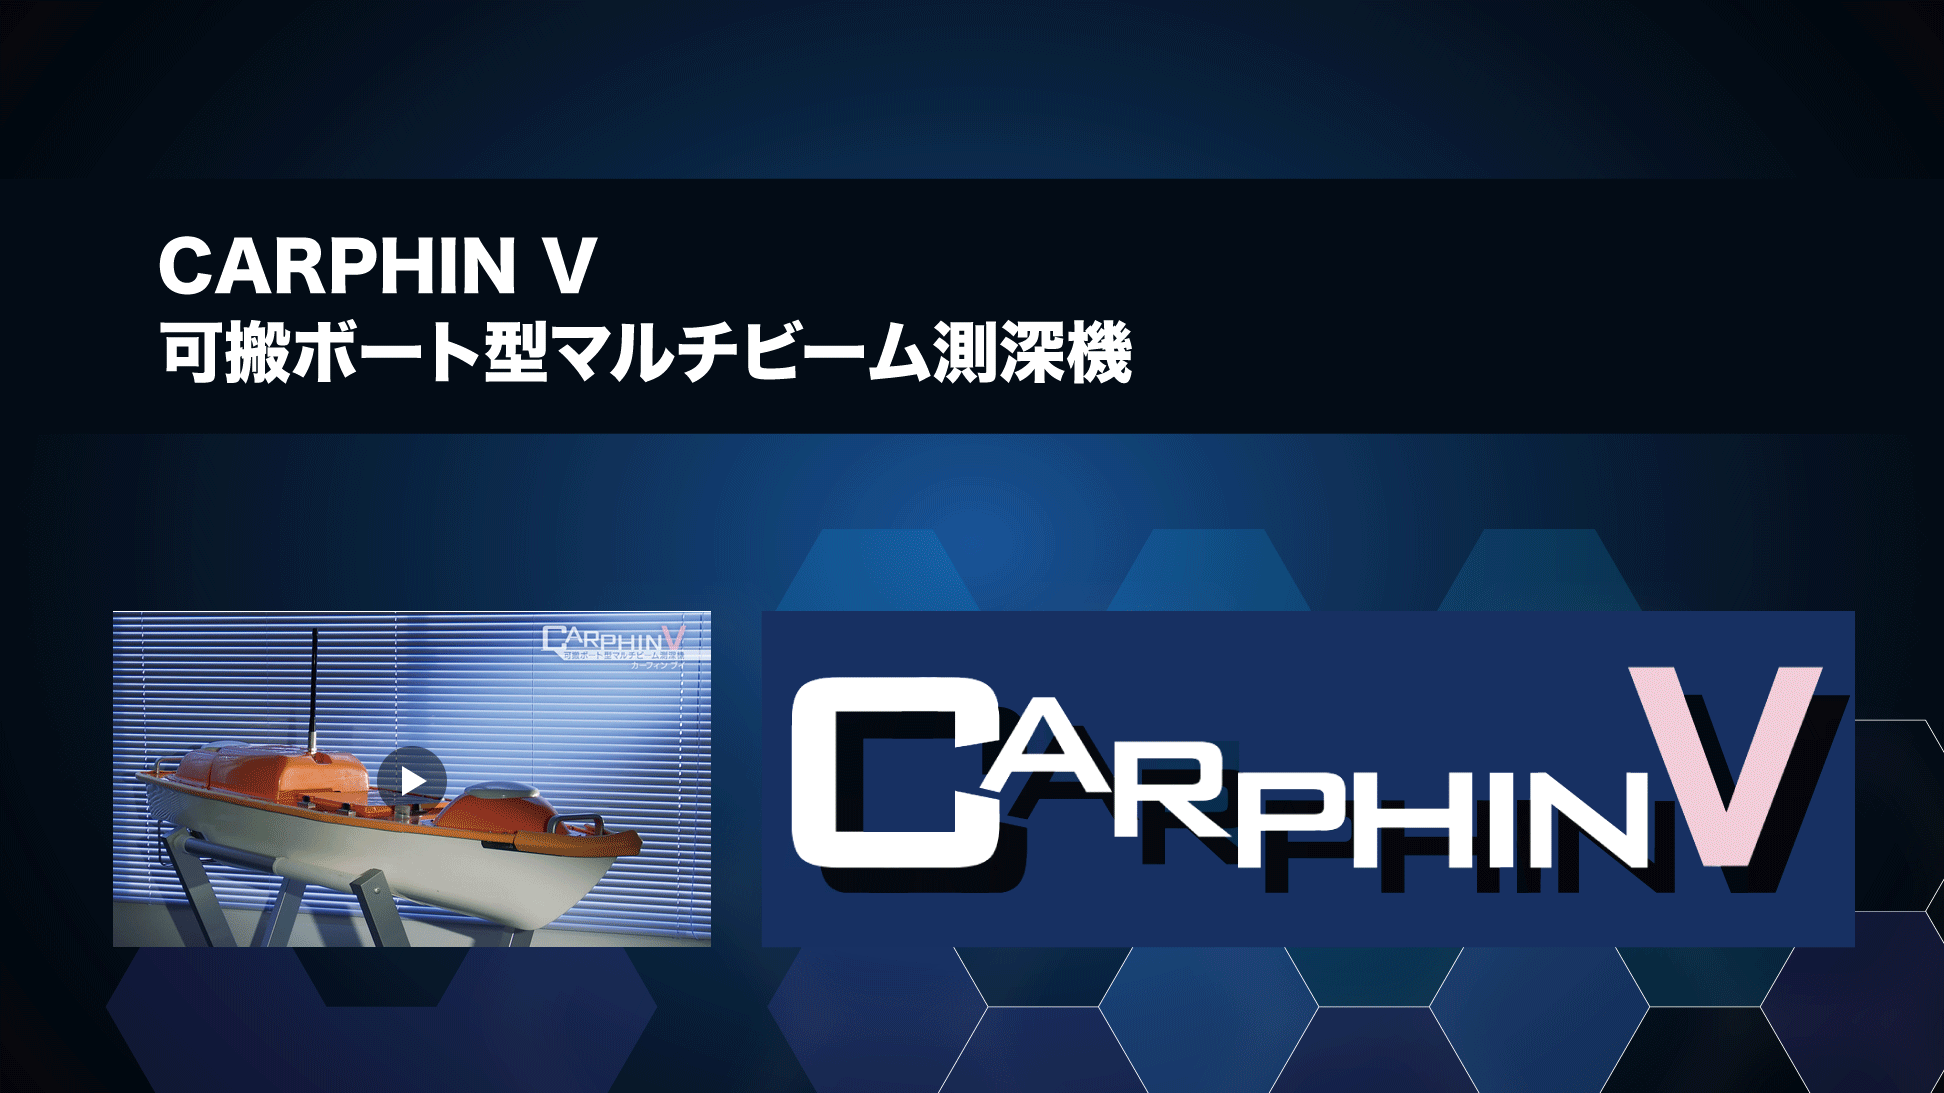 CARPHIN V 可搬ボート型マルチビーム測深機